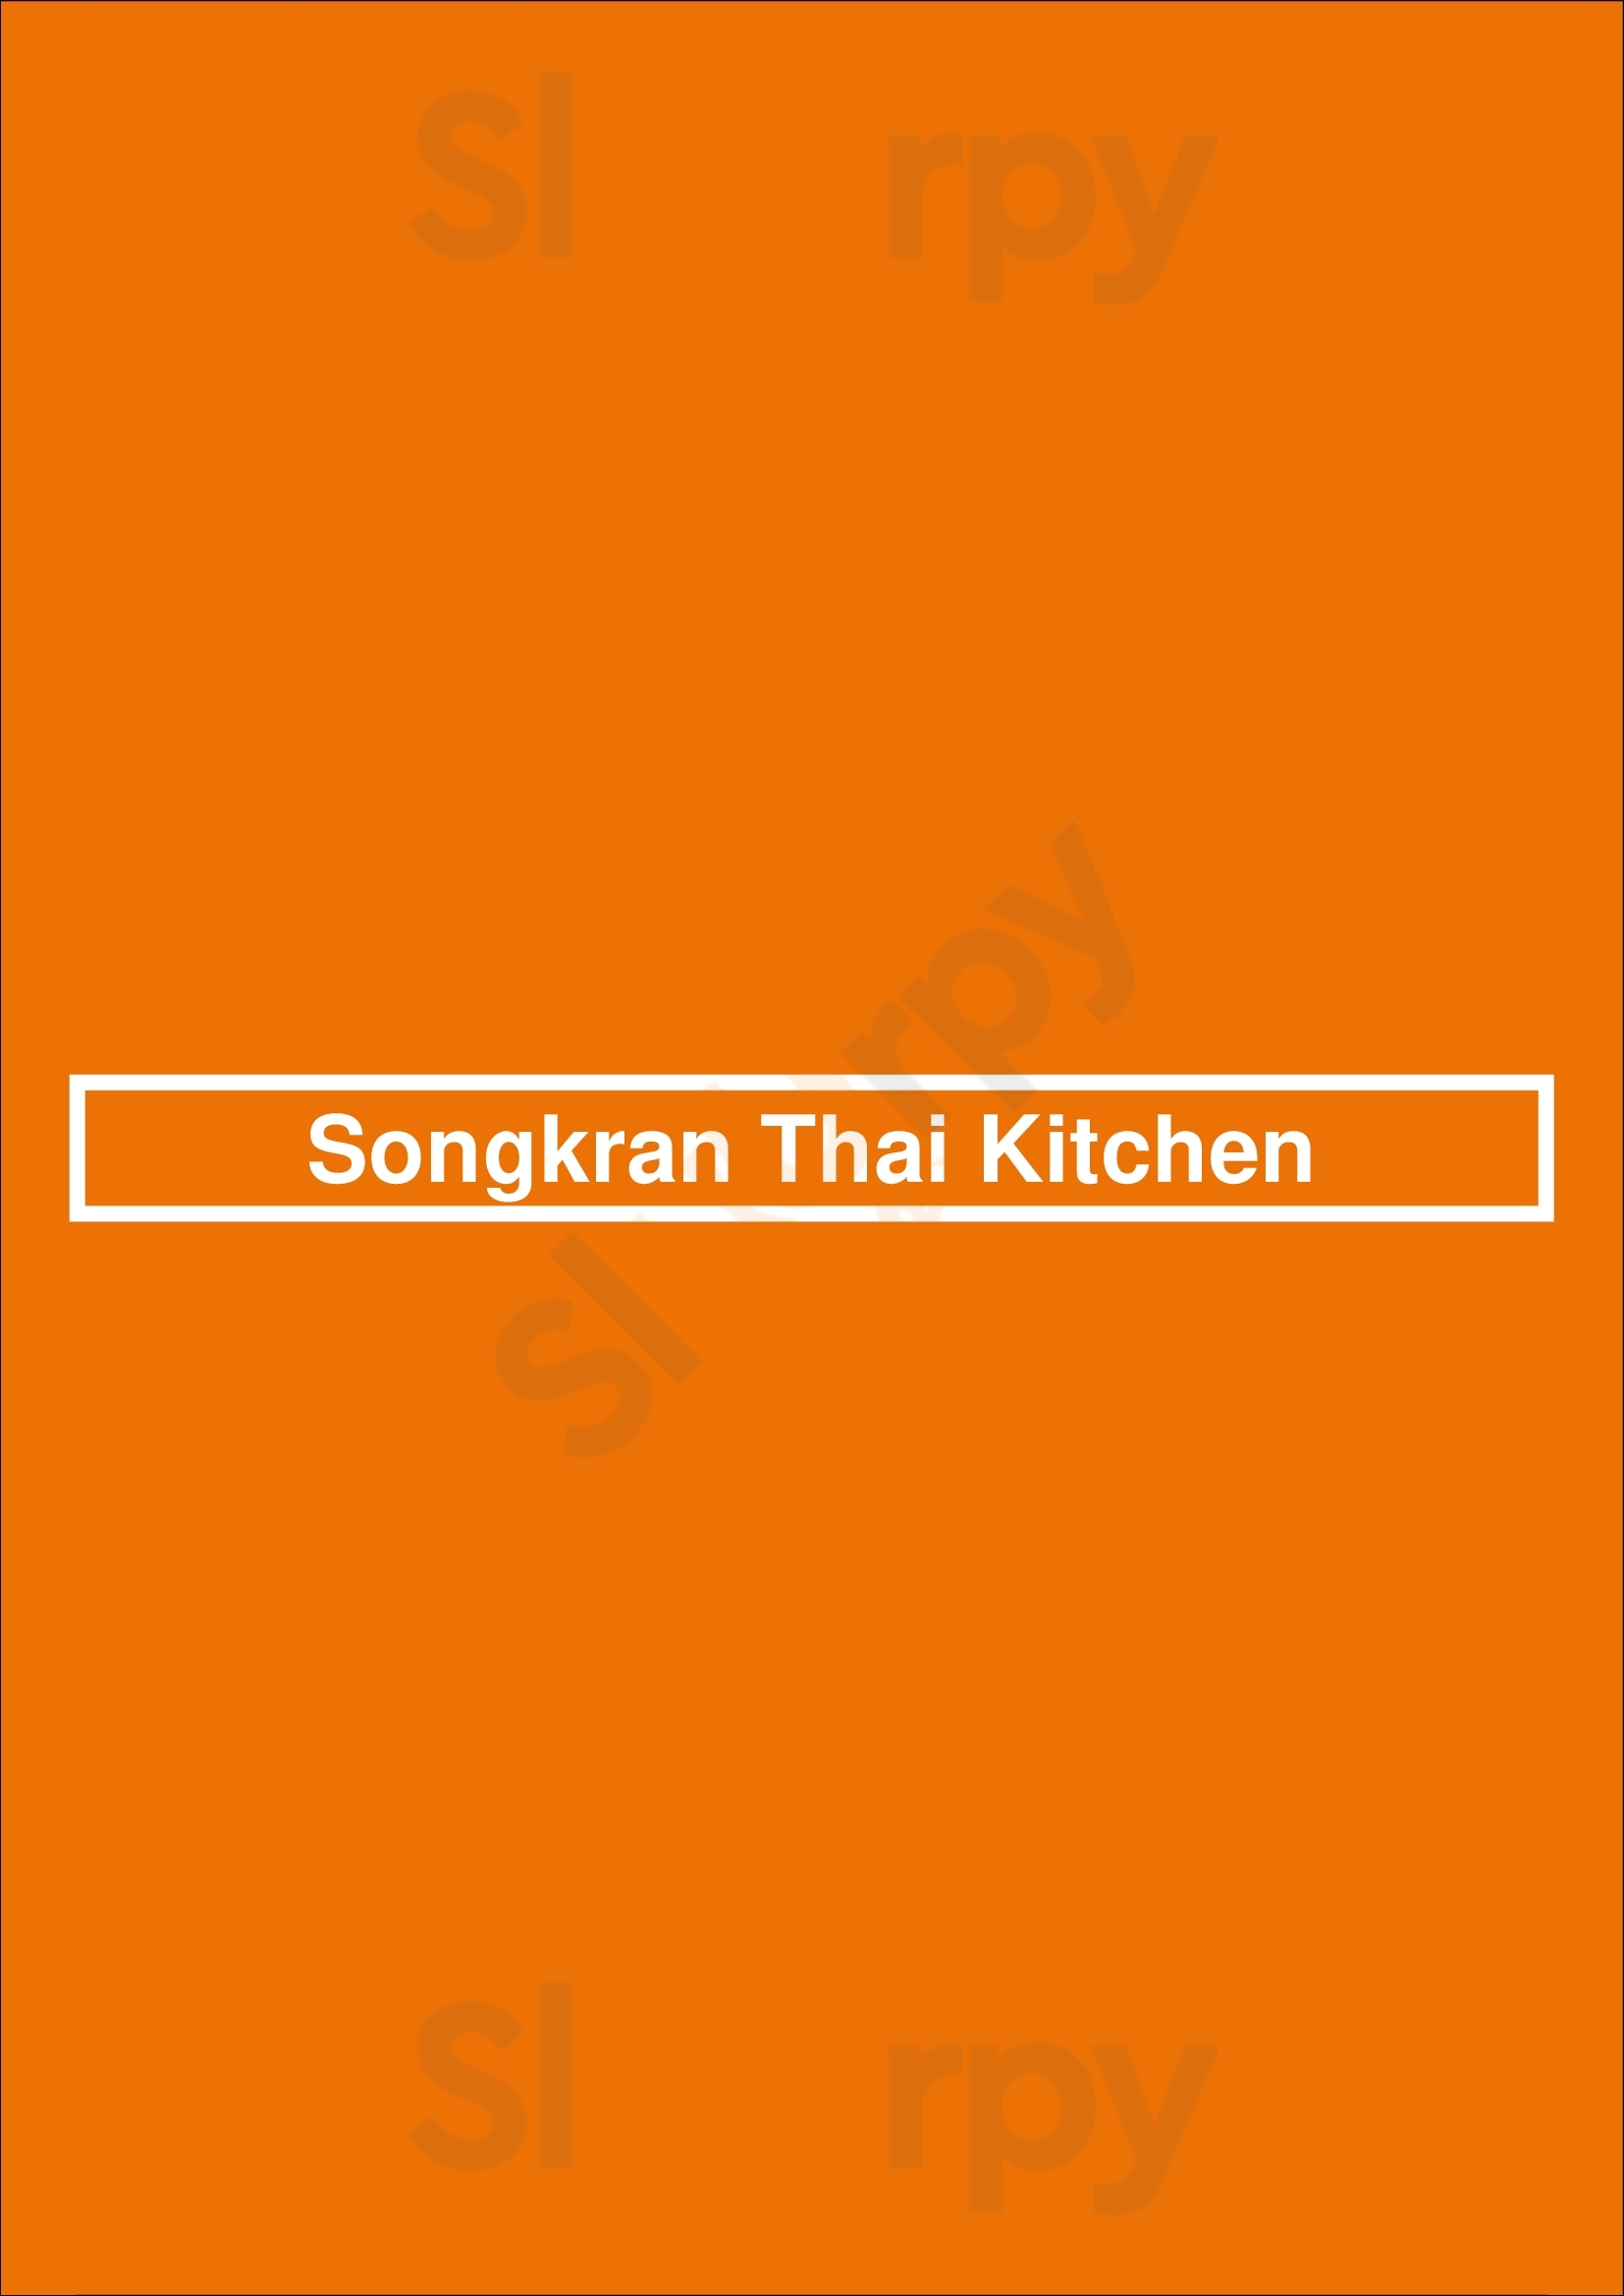 Songkran Thai Kitchen Houston Menu - 1